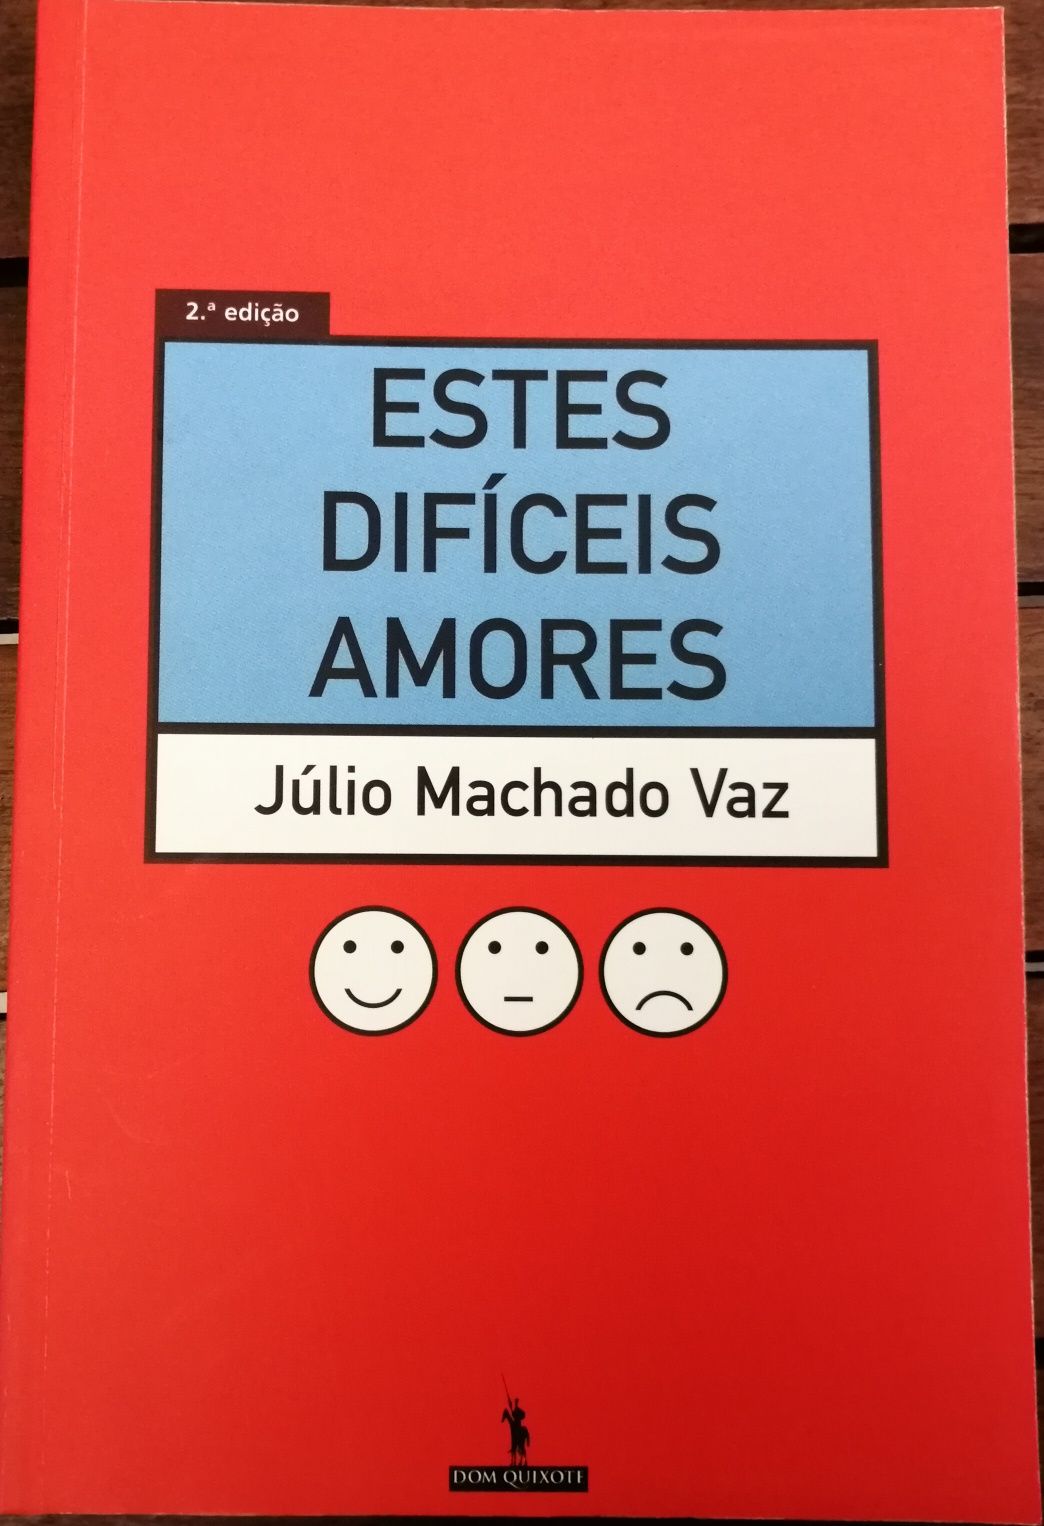 Livro "Estes Dificeis Amores", Júlio Machado Vaz